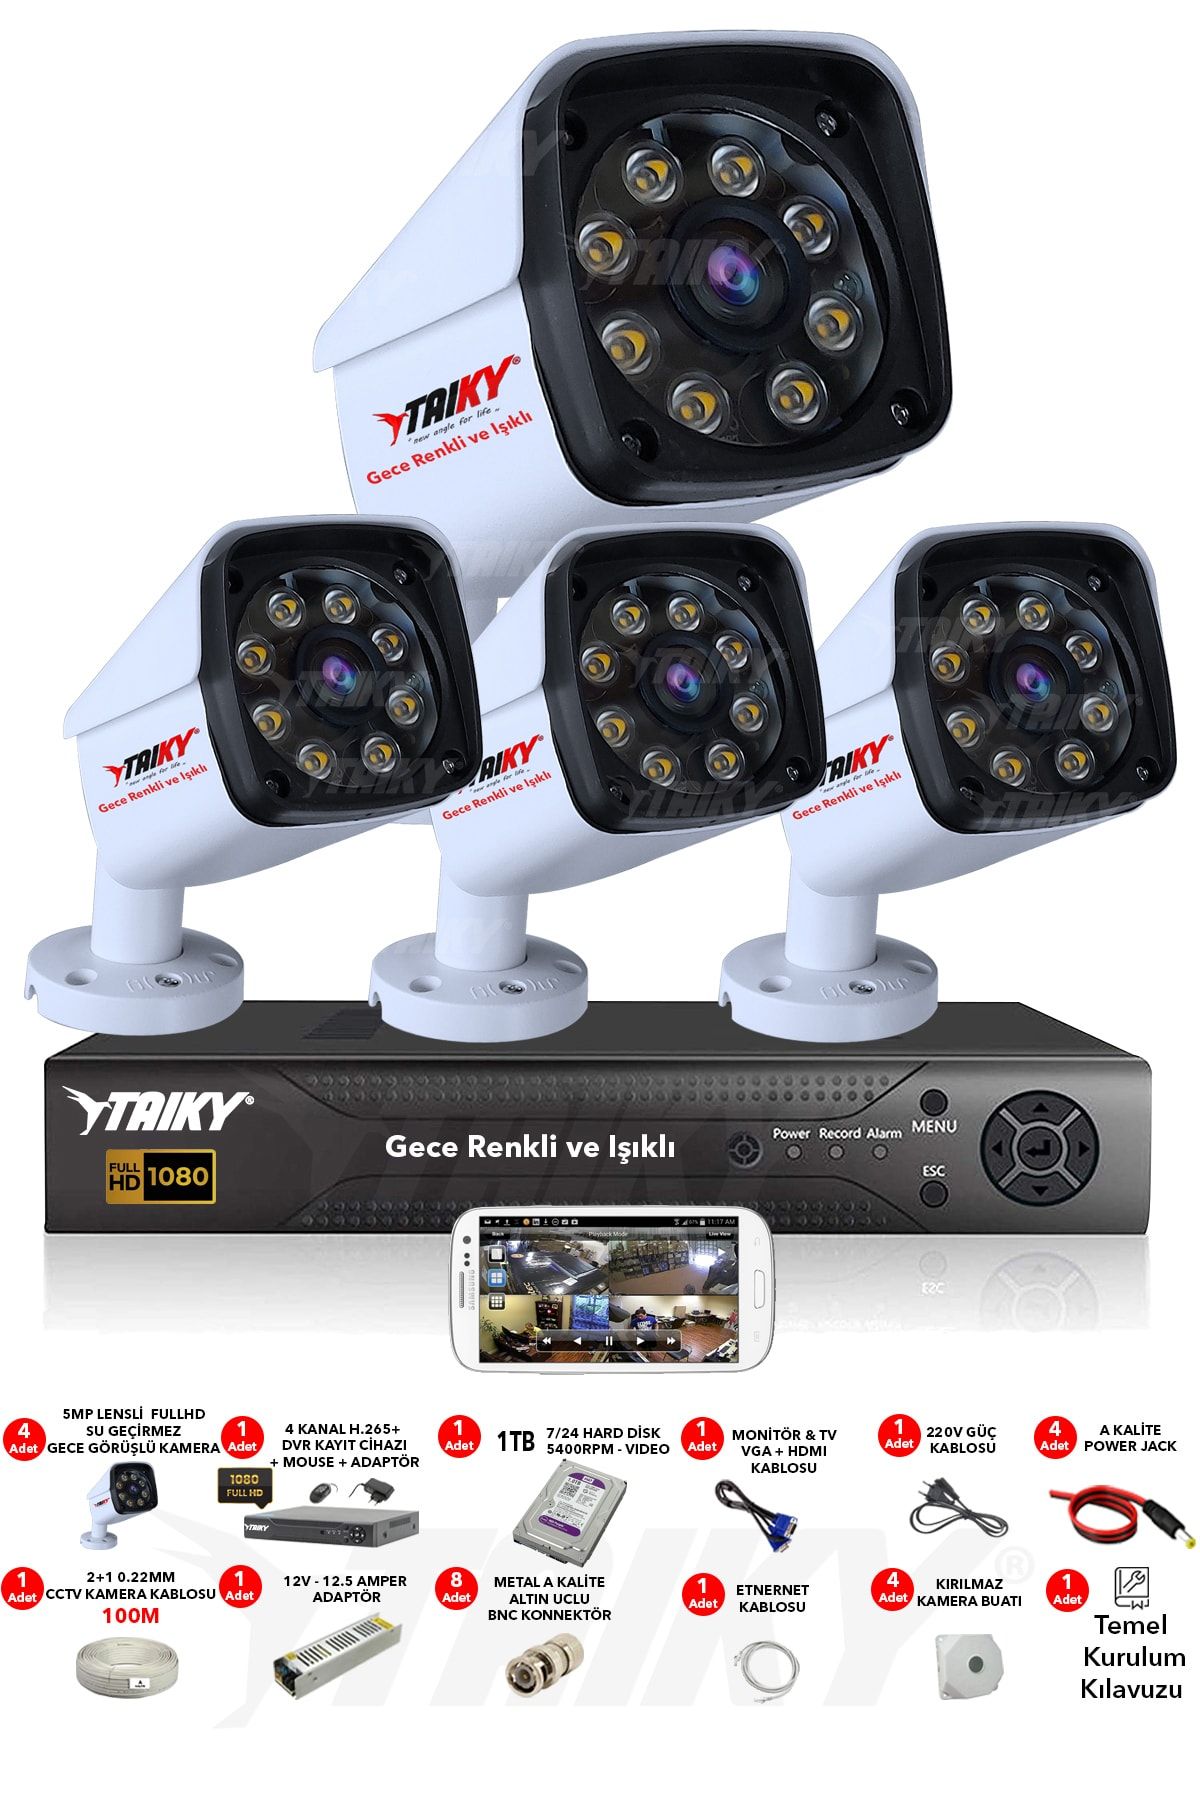 TAIKY 4 Kameralı 5mp Sony Lensli Fullhd 1080p Gece Renkli Kamera Seti Güvenlik Kamera Sistemleri F144-1tb